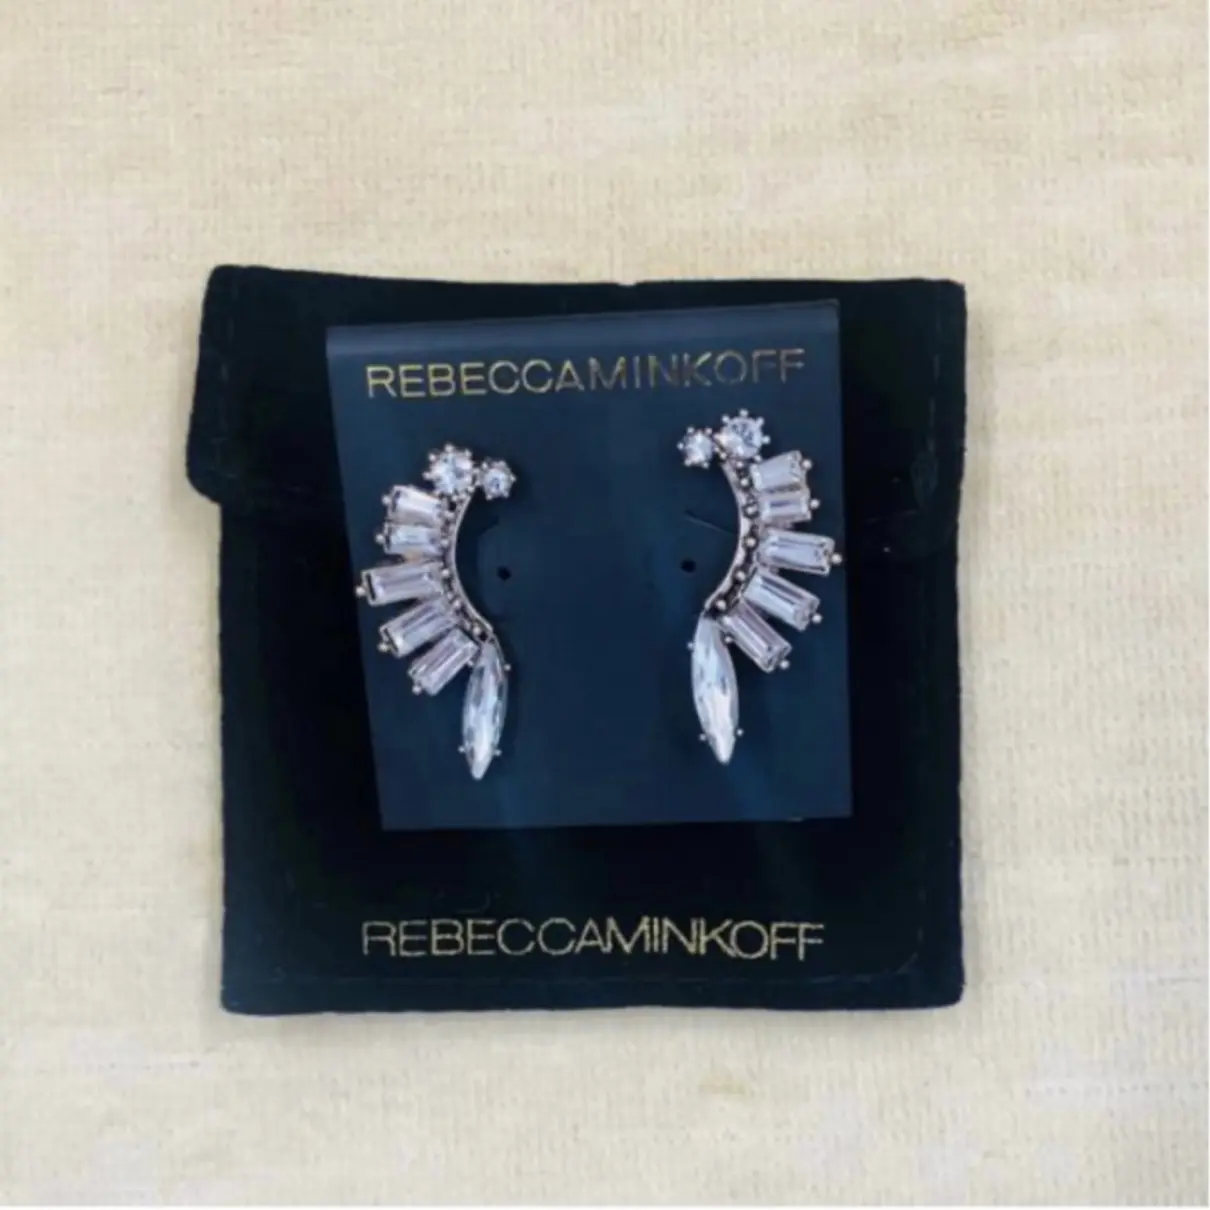 Buy Rebecca Minkoff Crystal earrings online